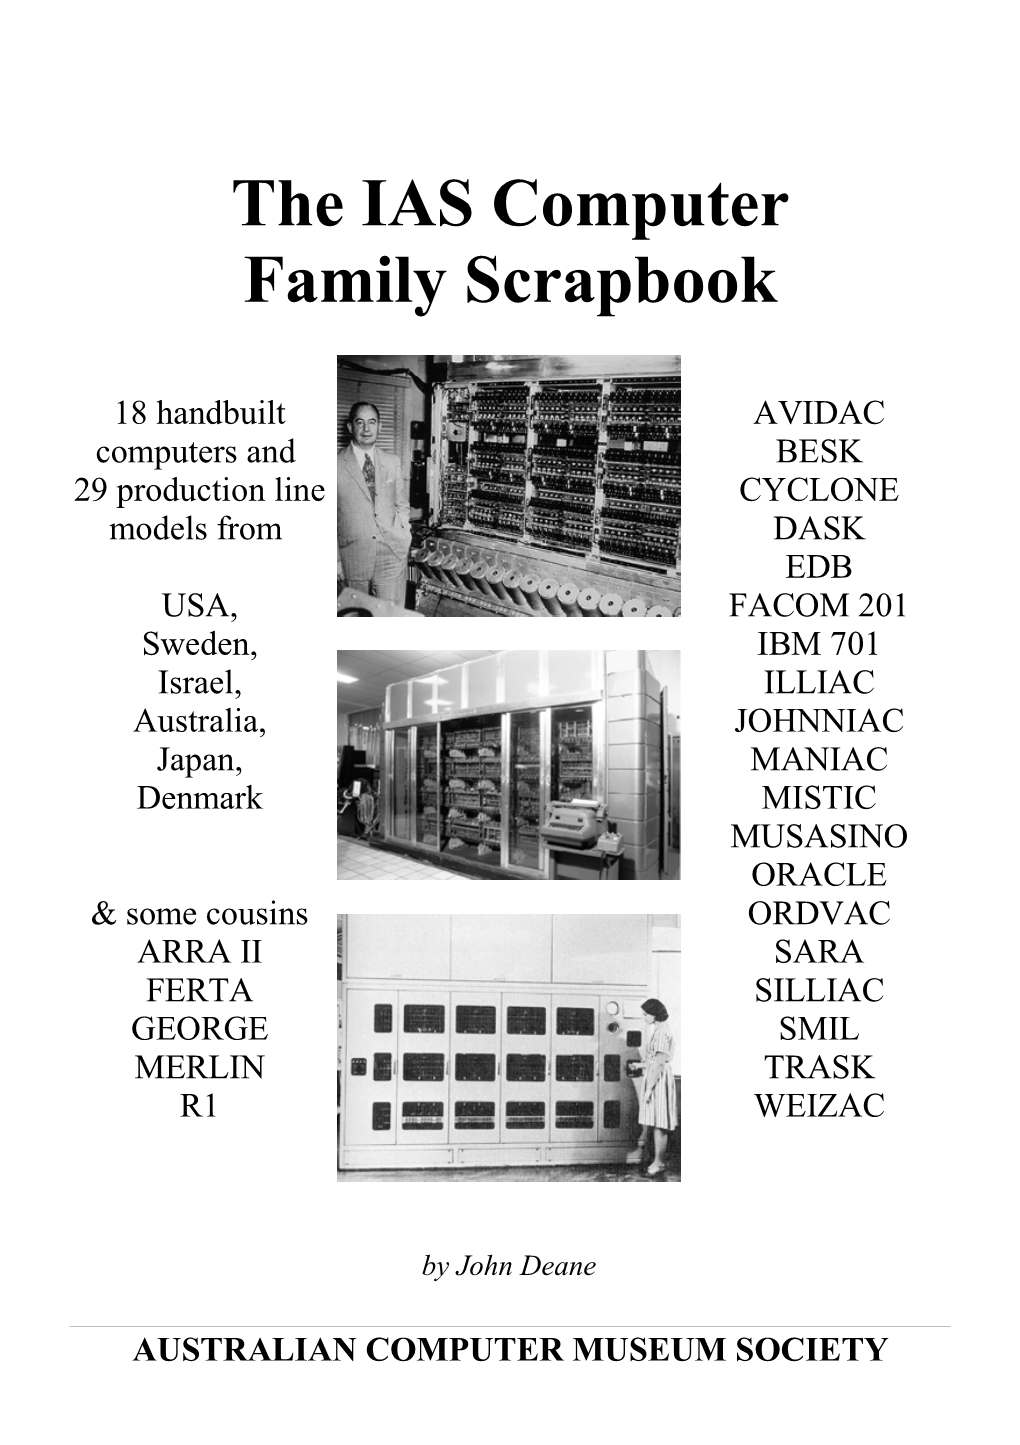 The IAS Computer Family Scrapbook